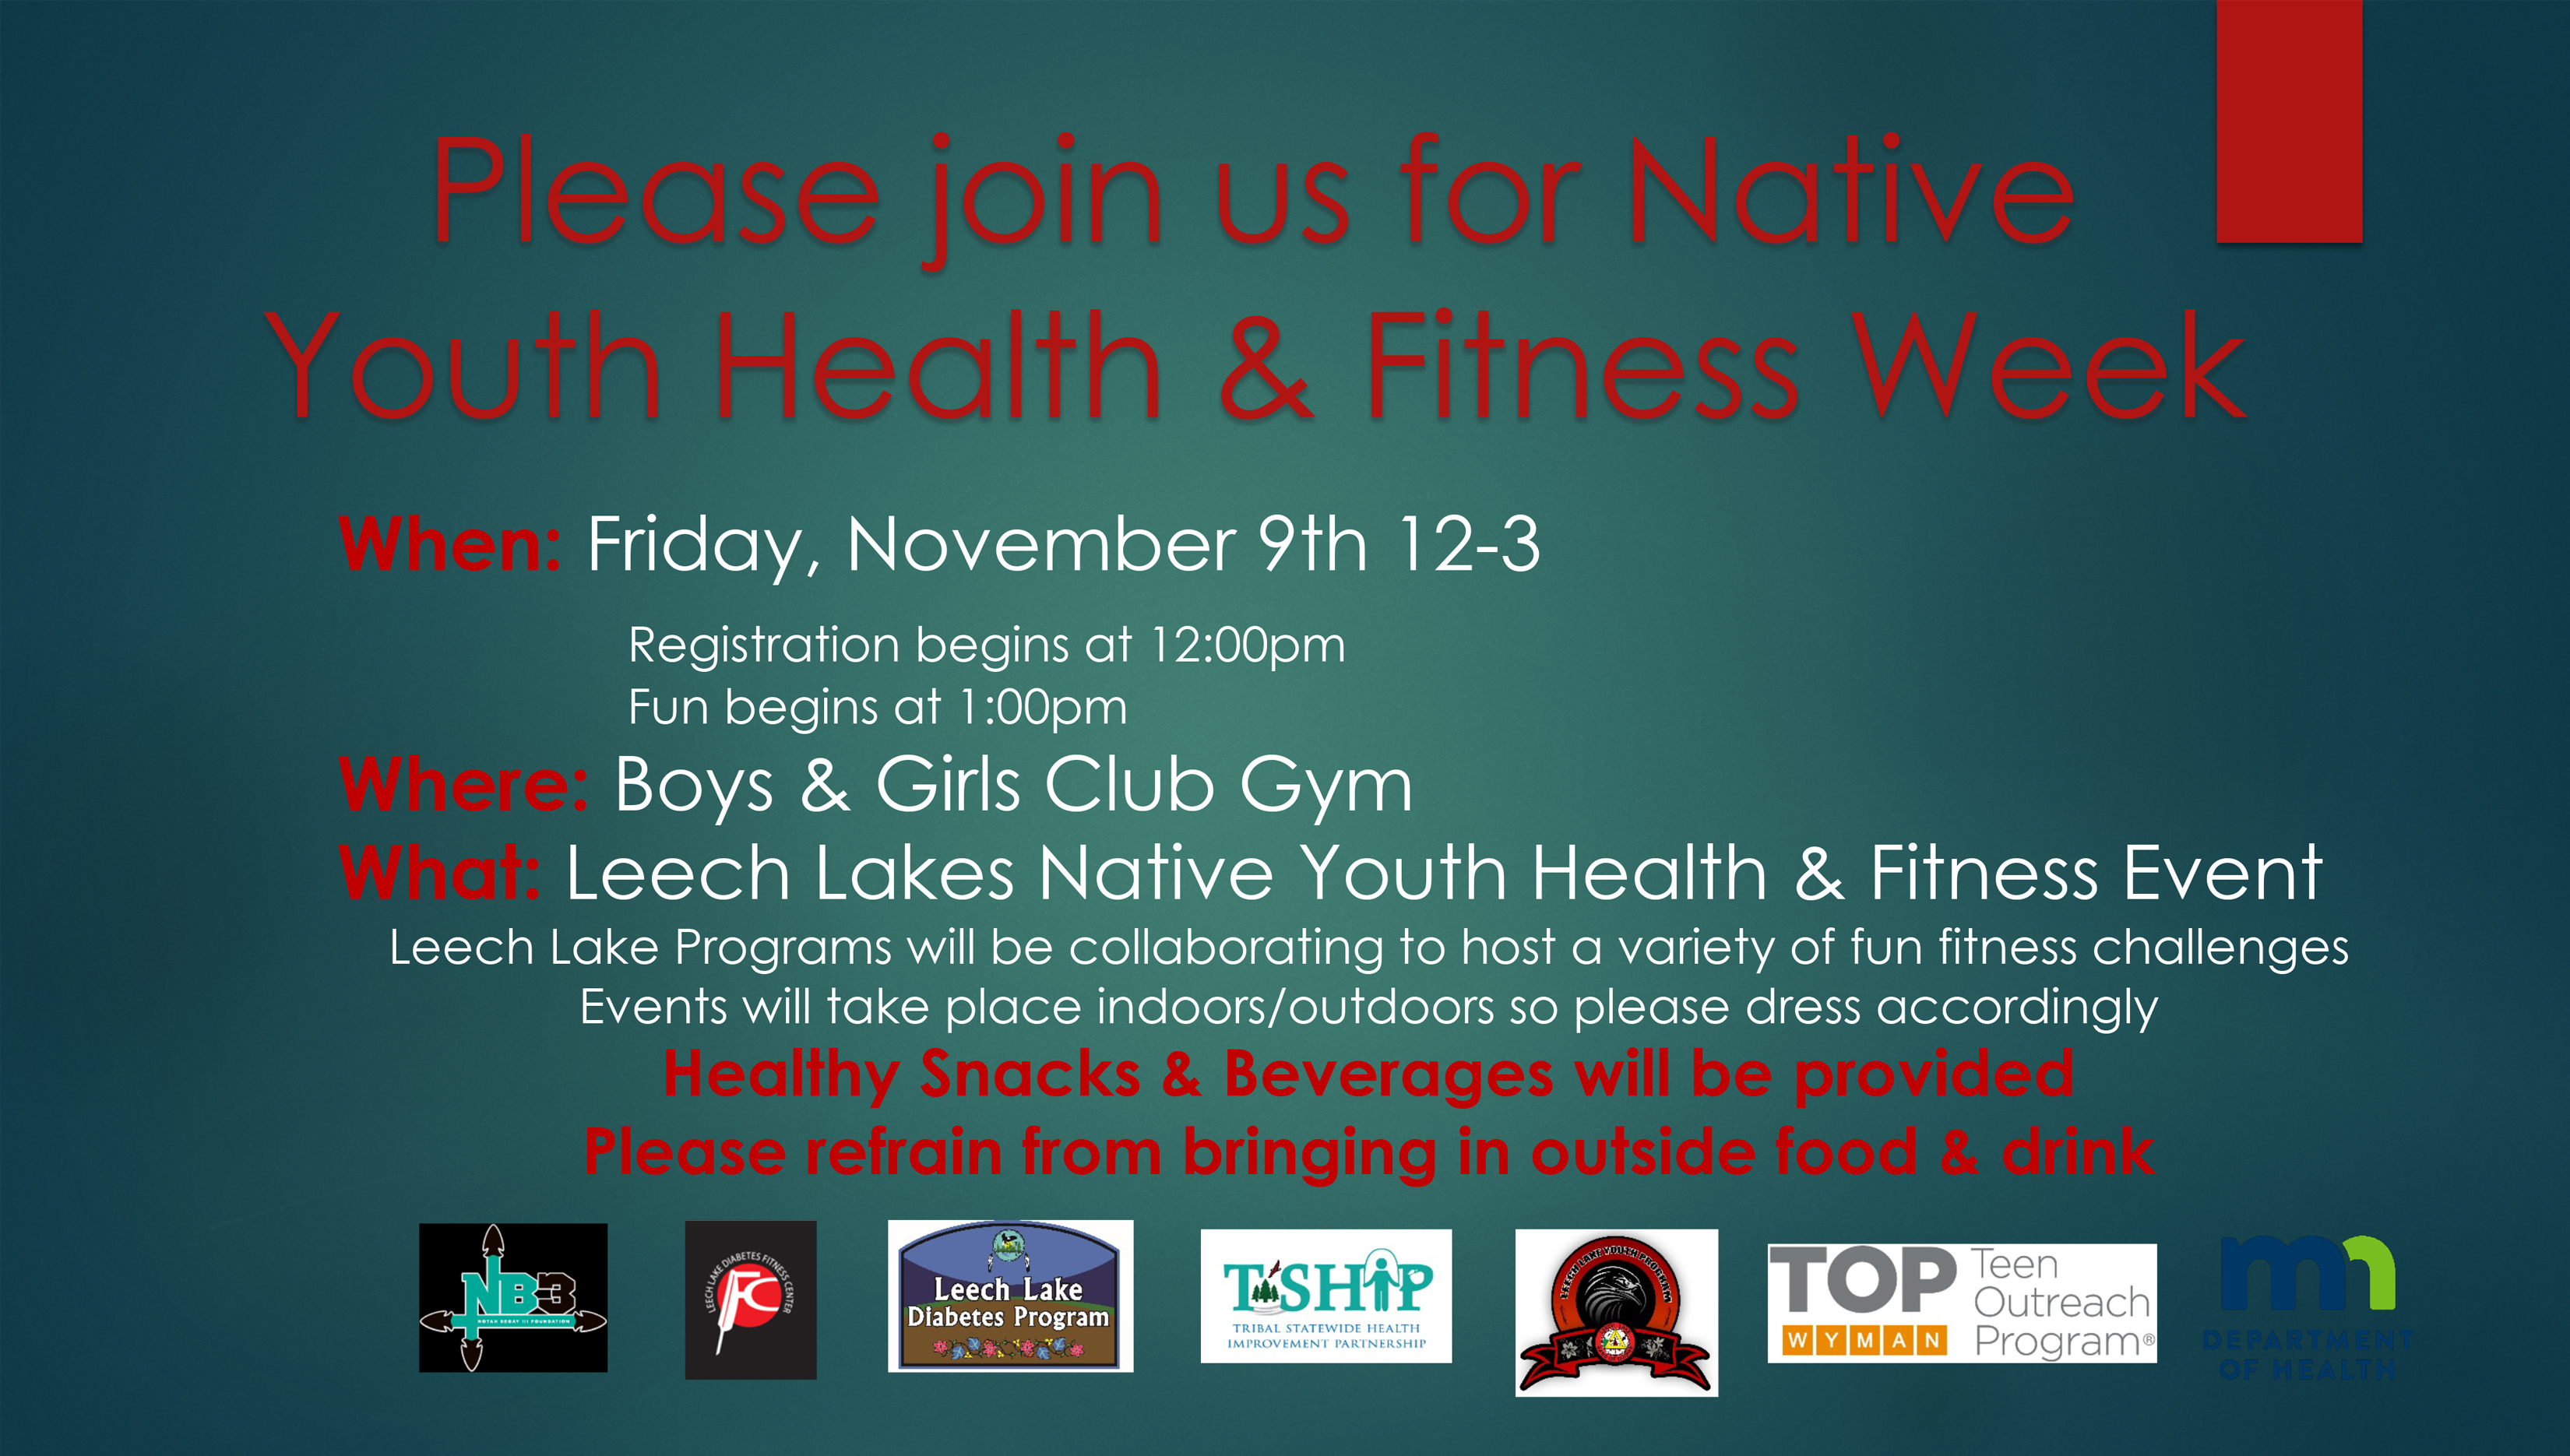 Native youth health and fitness - Leech Lake News